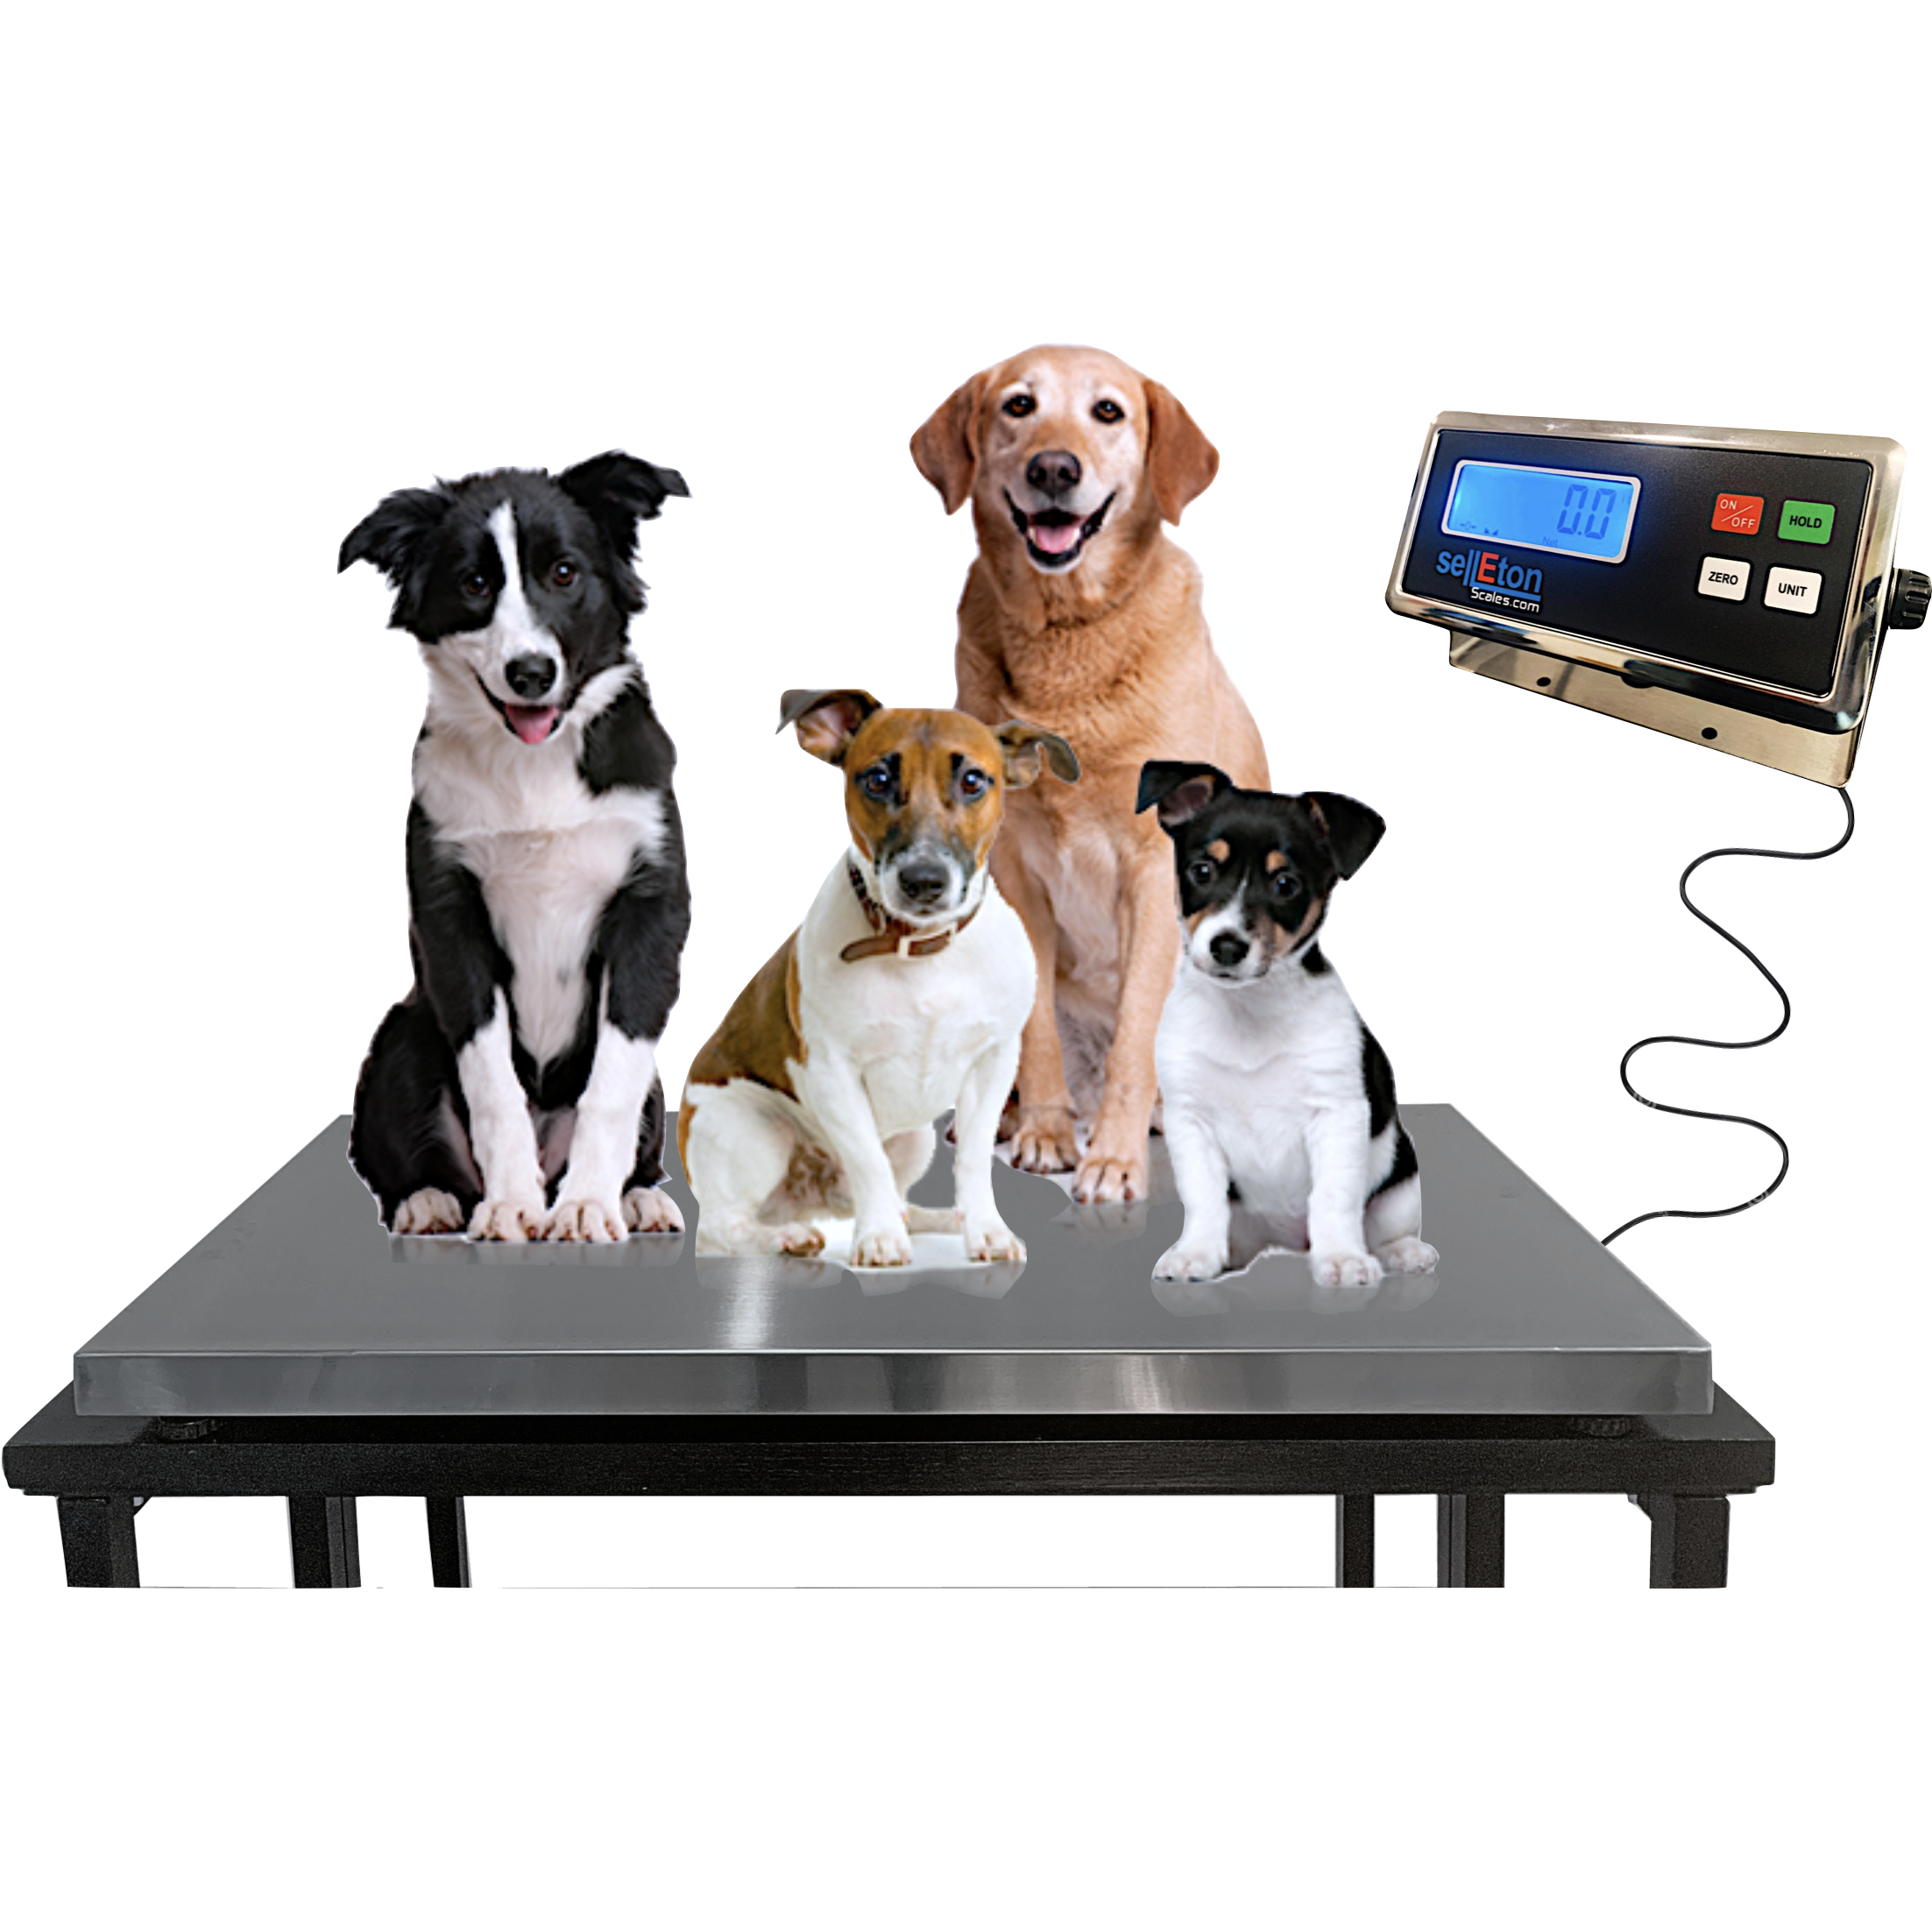 Mobile Veterinary Scales